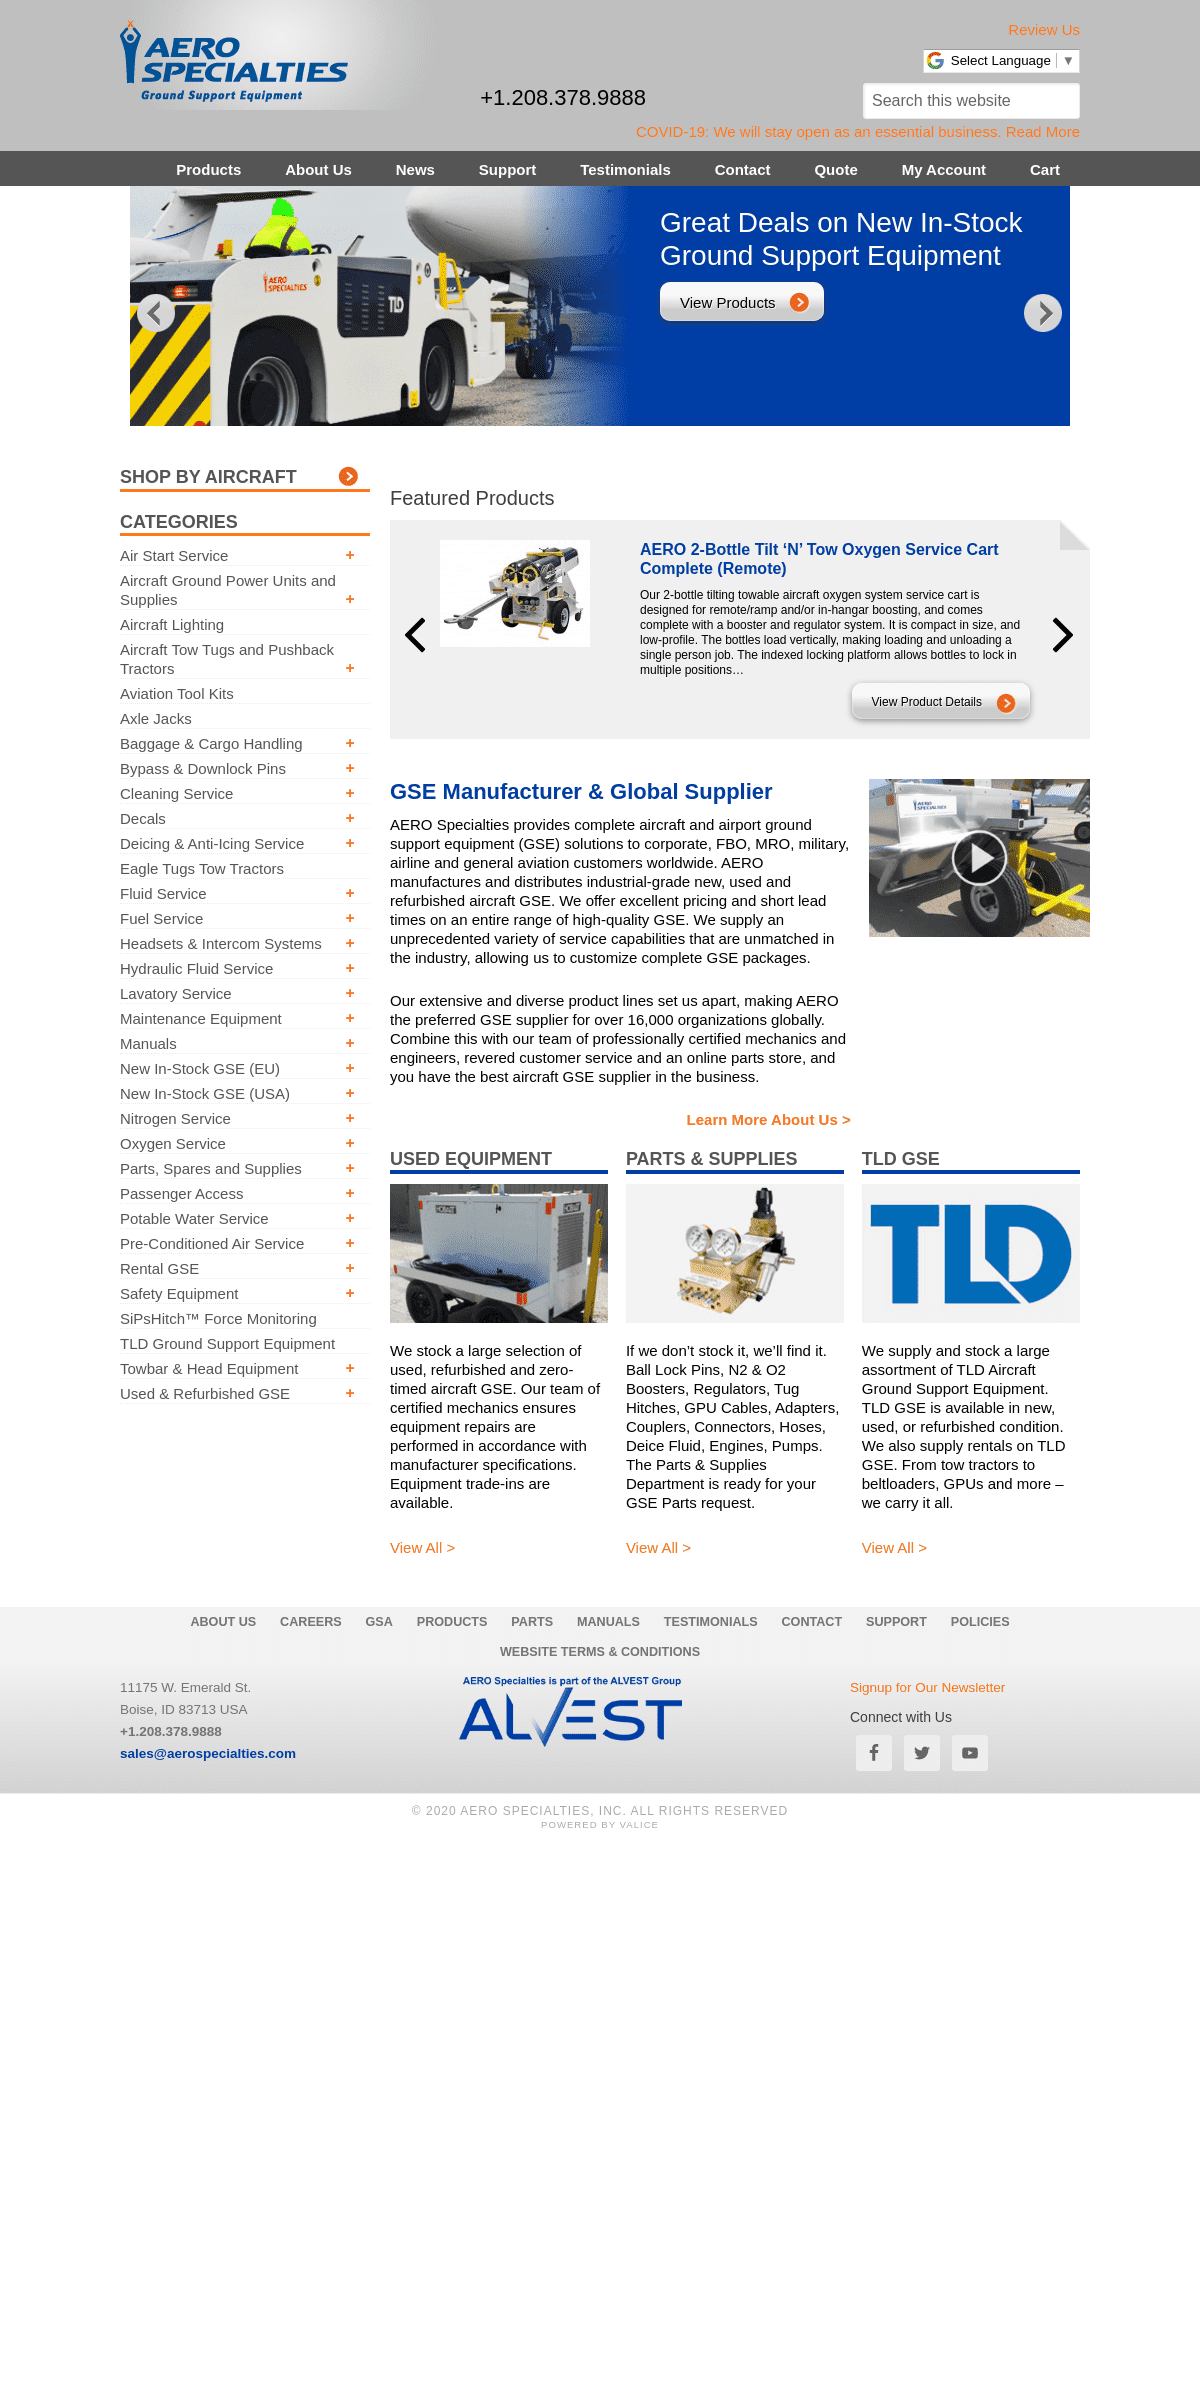 A complete backup of aerospecialties.com